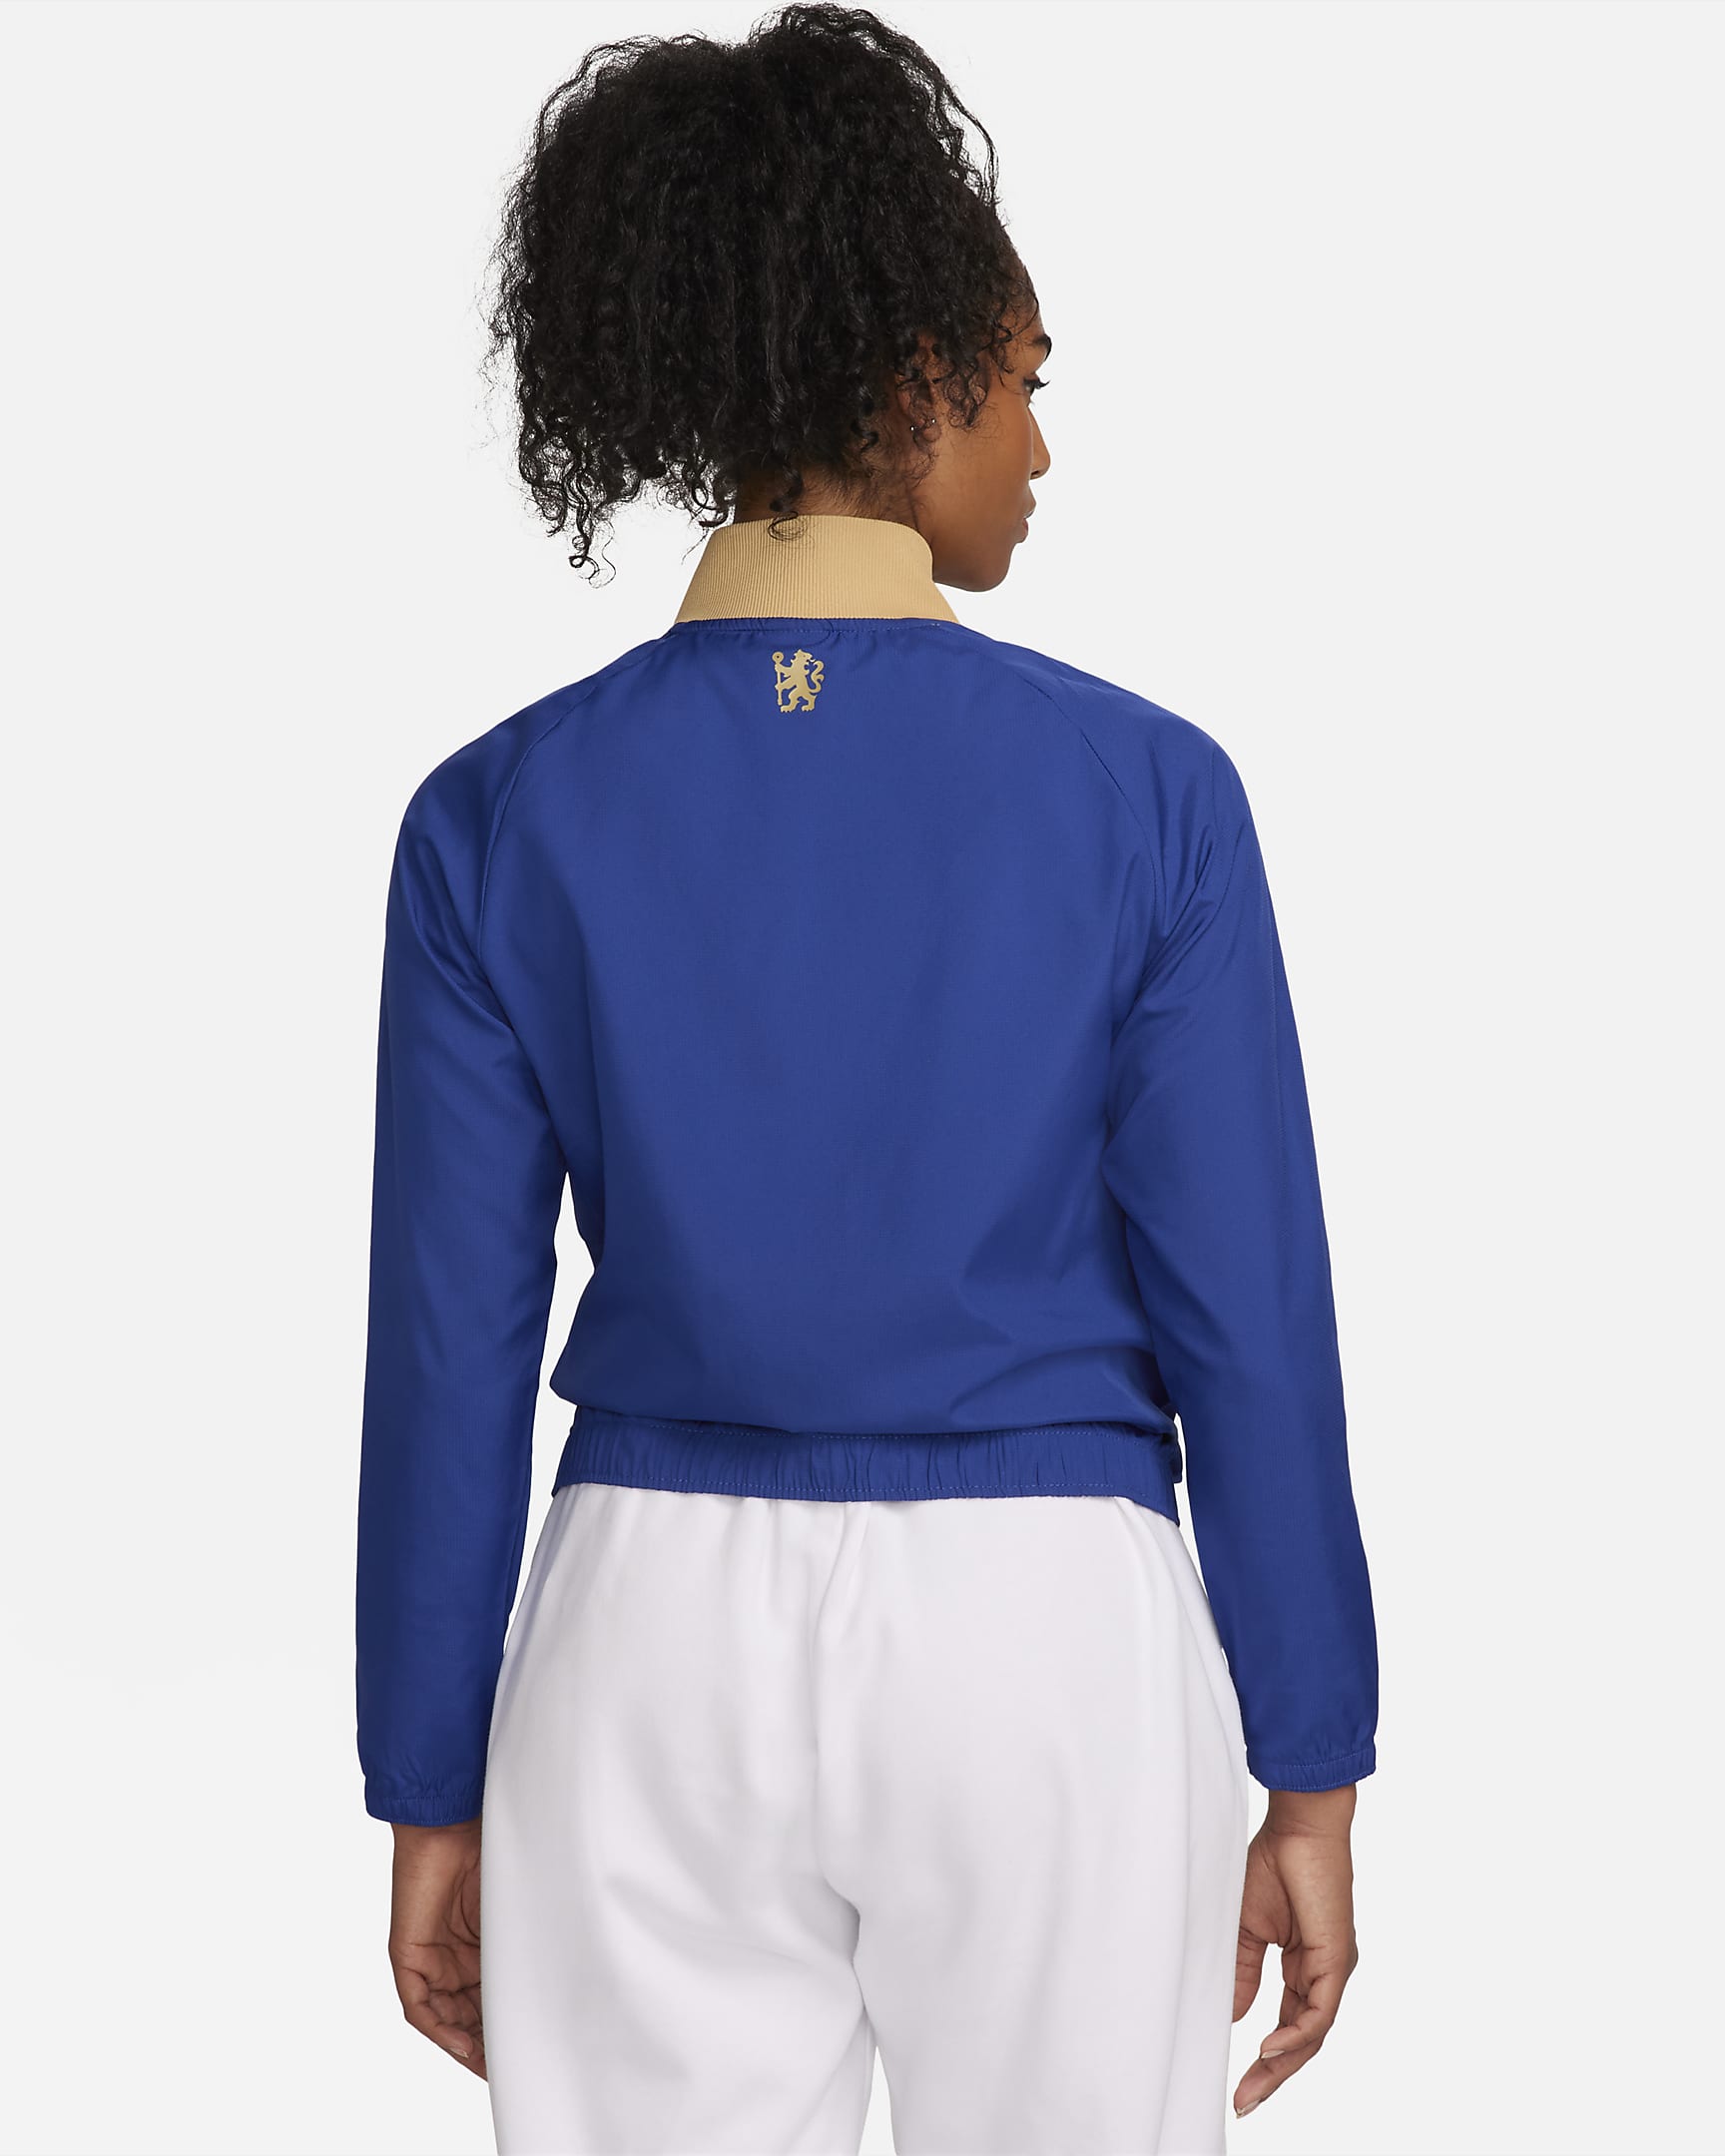 Chelsea FC Women's Nike Dri-FIT Soccer Jacket. Nike.com